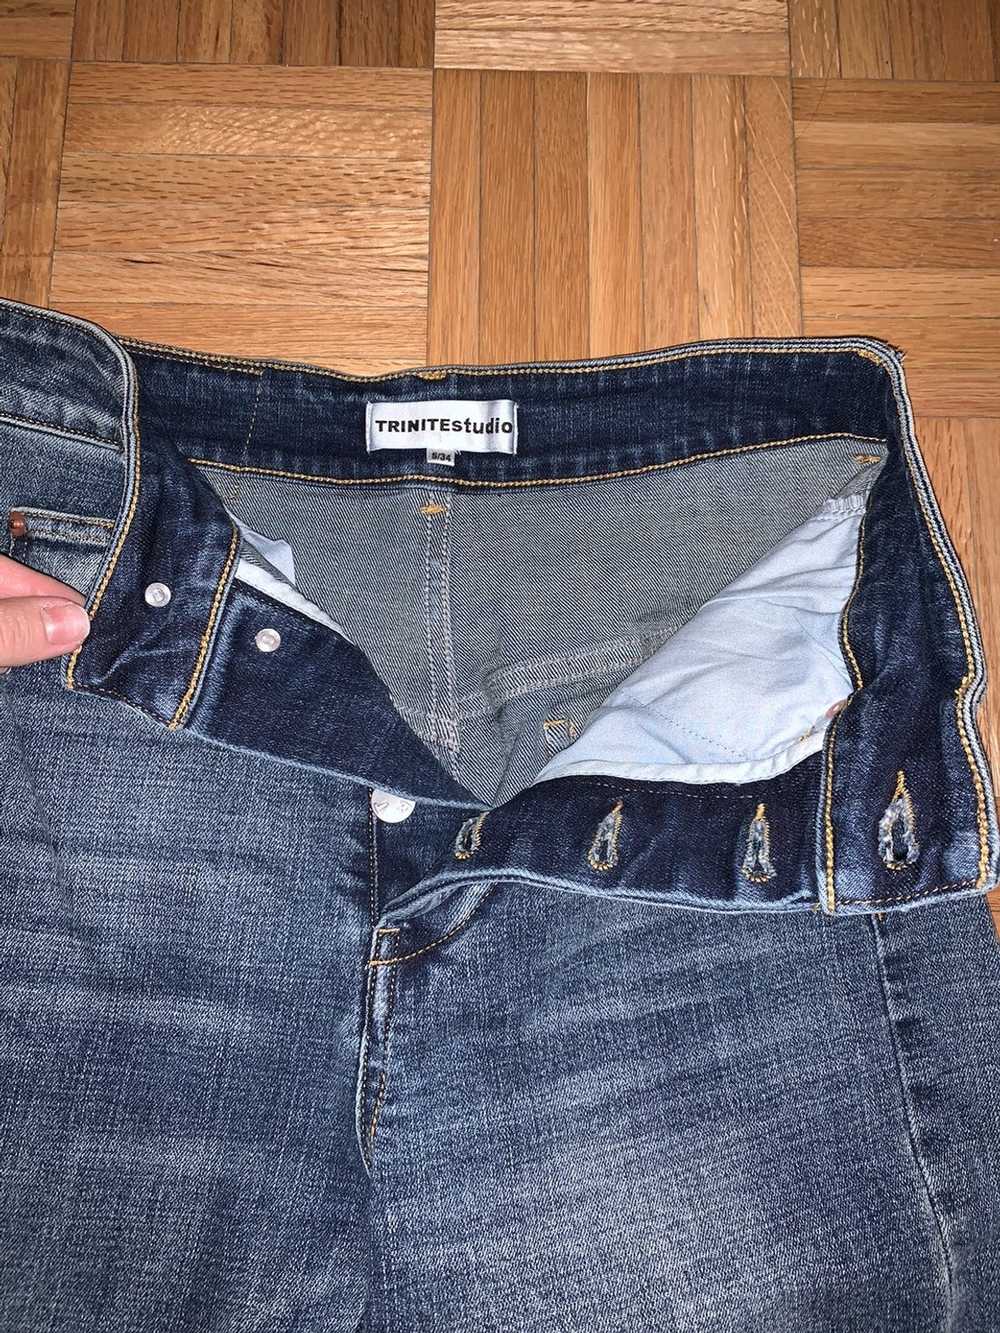 Designer Trinite washed jeans in blue size S - image 8